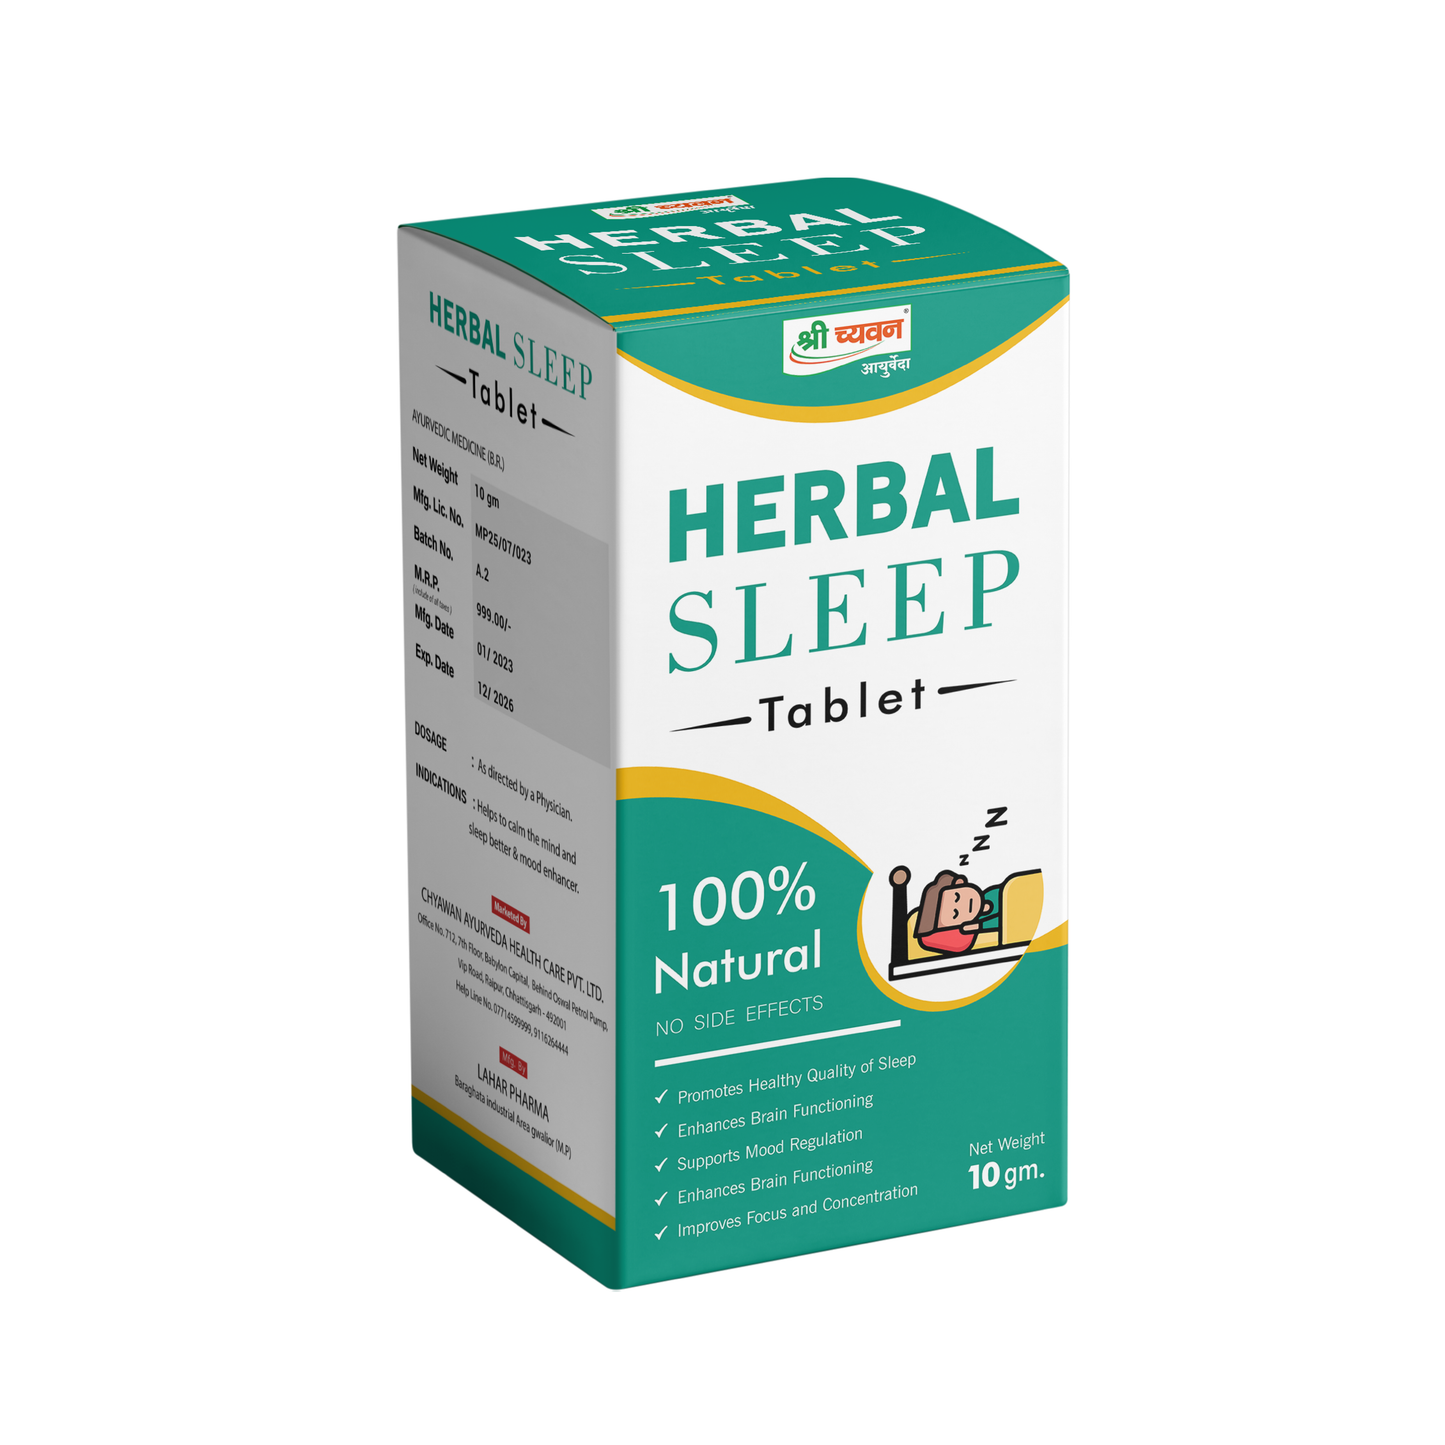 Herbal sleep for better sleep